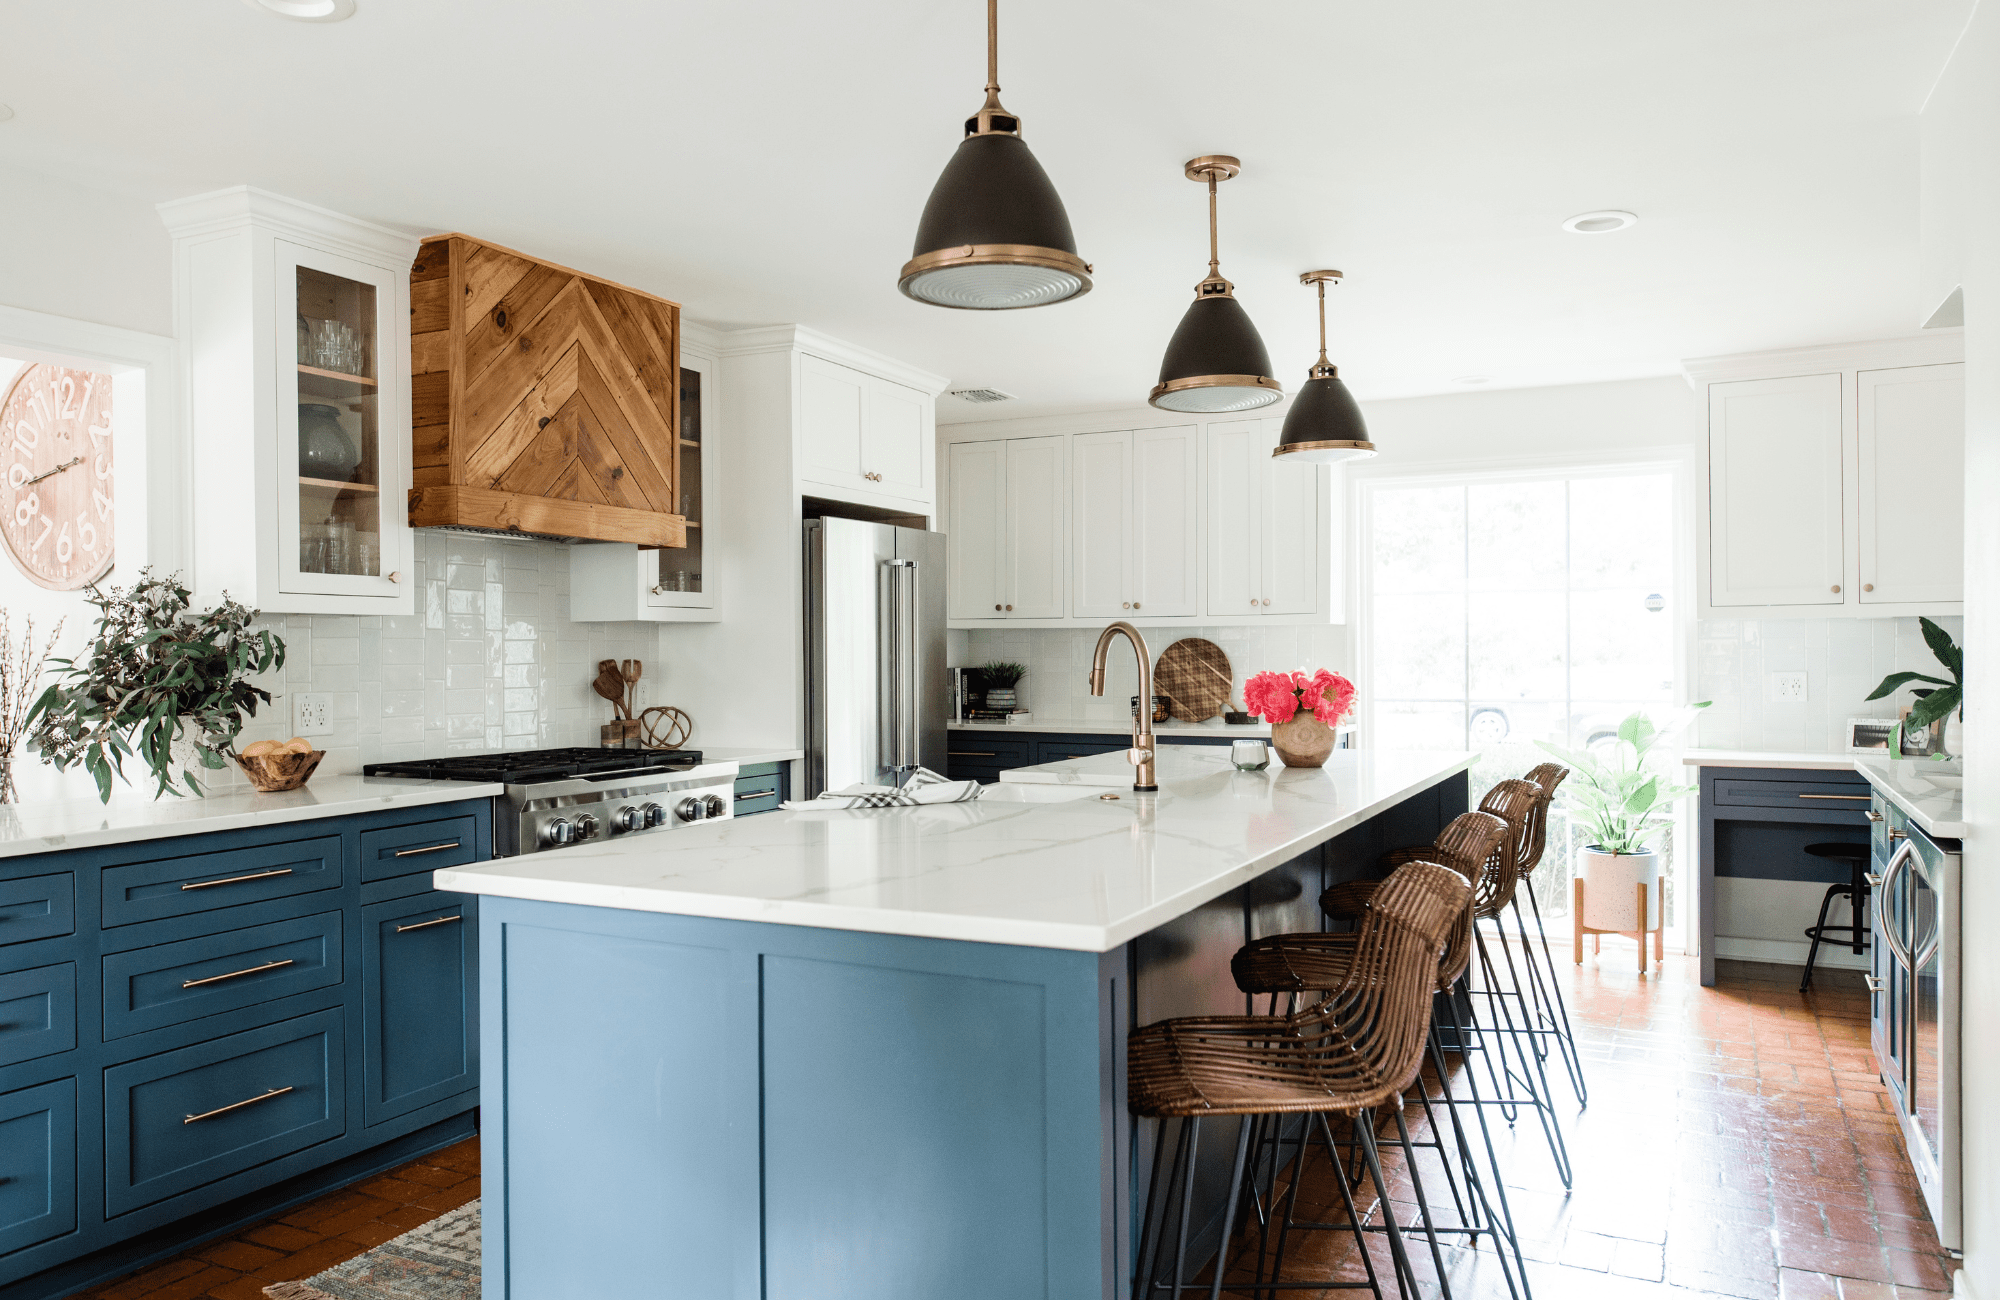 styleberry-creative-interiors-havest-hills-tx-top-renovation-regrets-kitchen-remodel-blue-cabinetry-brick-floors-wood-range-hood-fresh-interior-design